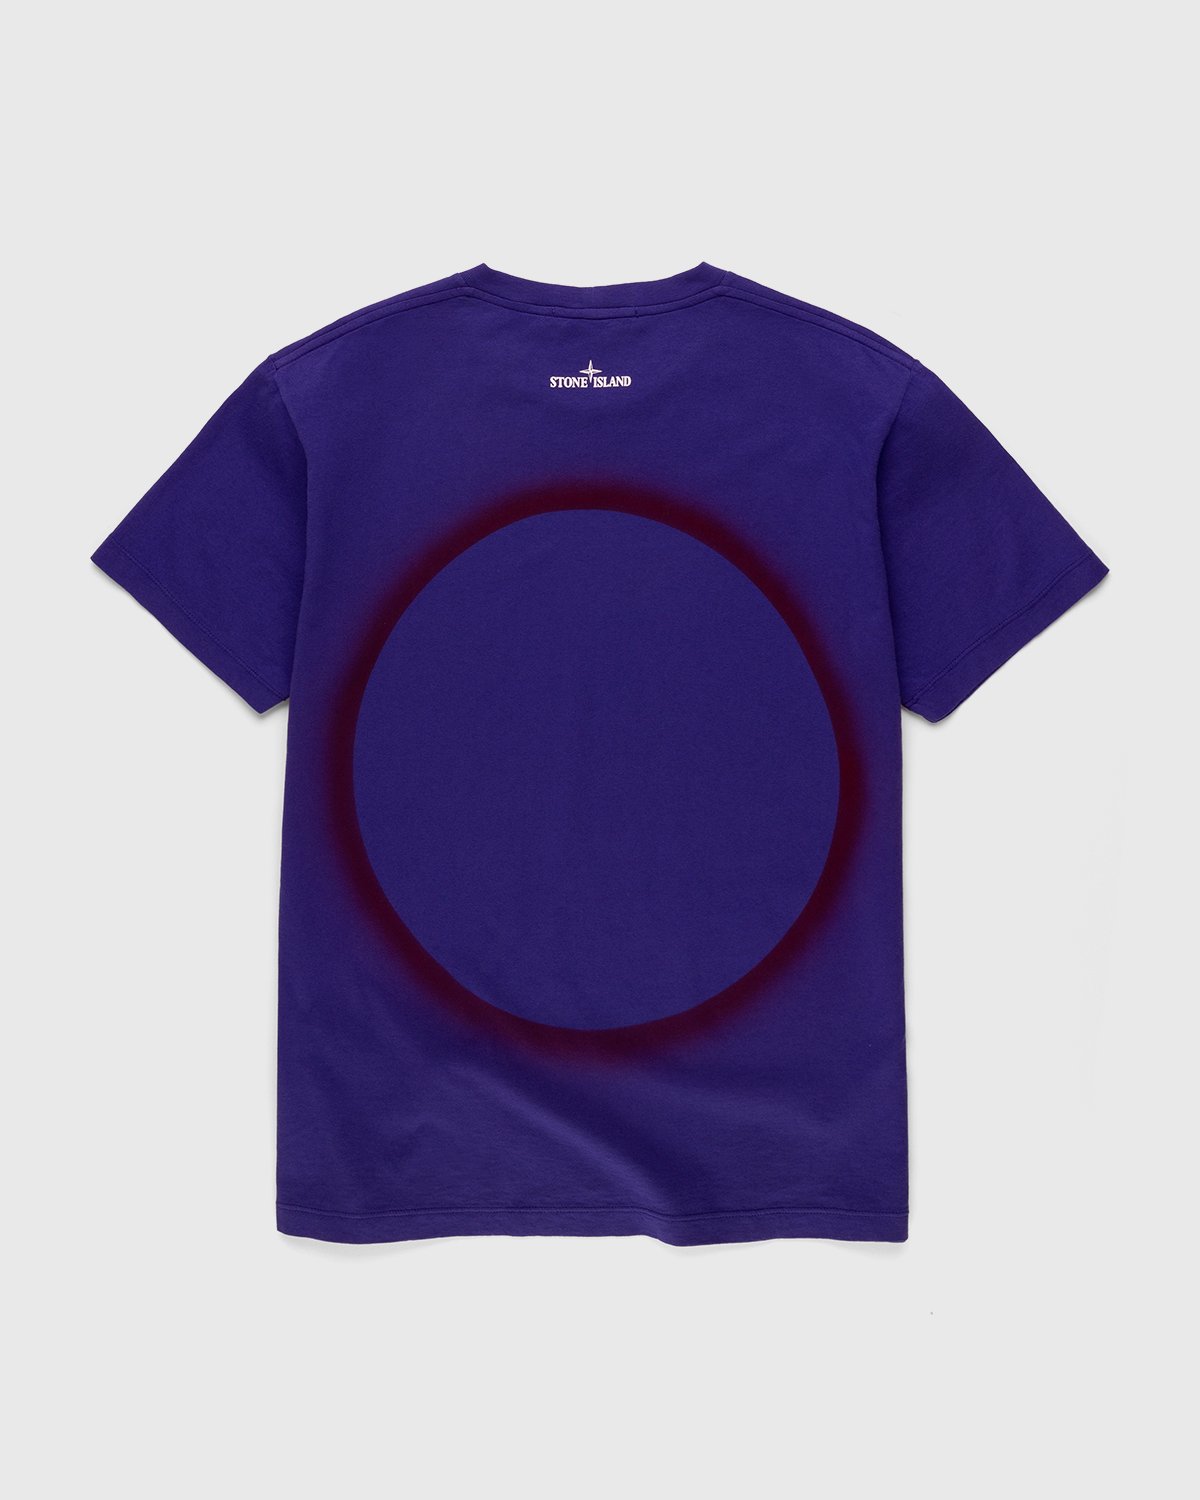 Stone Island - 2NS95 Garment-Dyed Solar Eclipse One T-Shirt Bright Blue - Clothing - Blue - Image 2